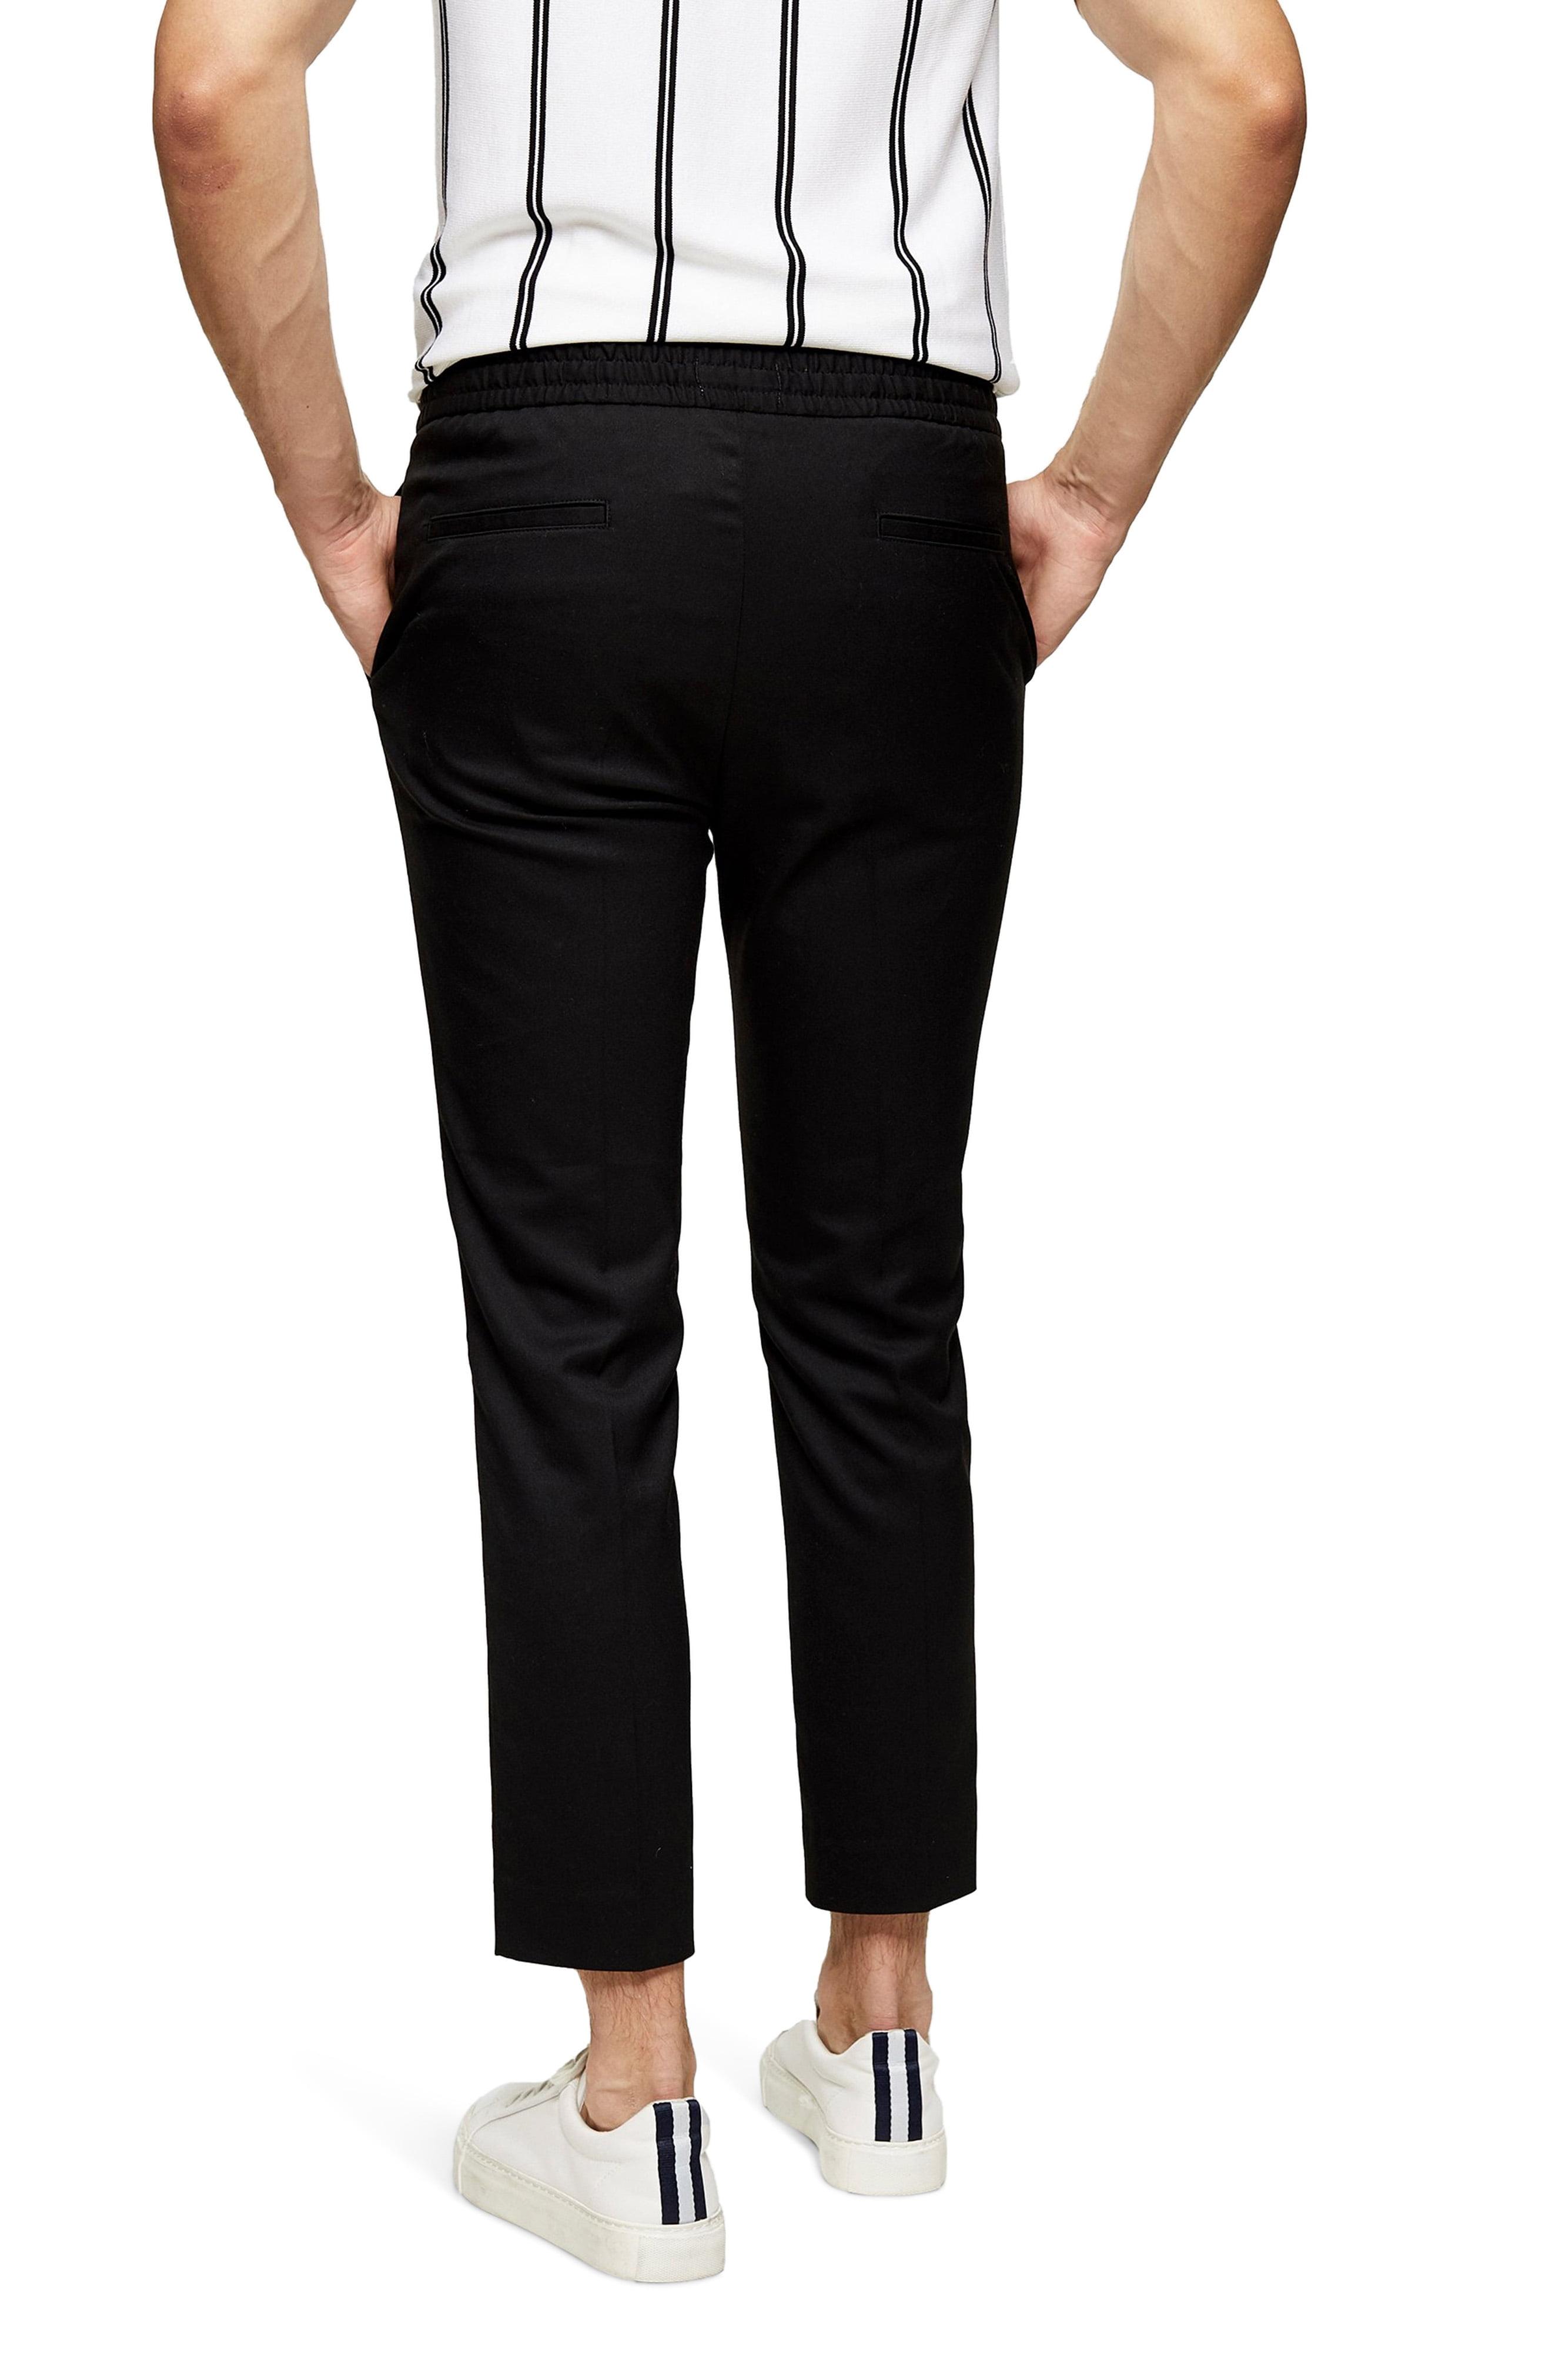 TOPMAN Slim Fit Crop Drawstring Pants in Black for Men - Lyst